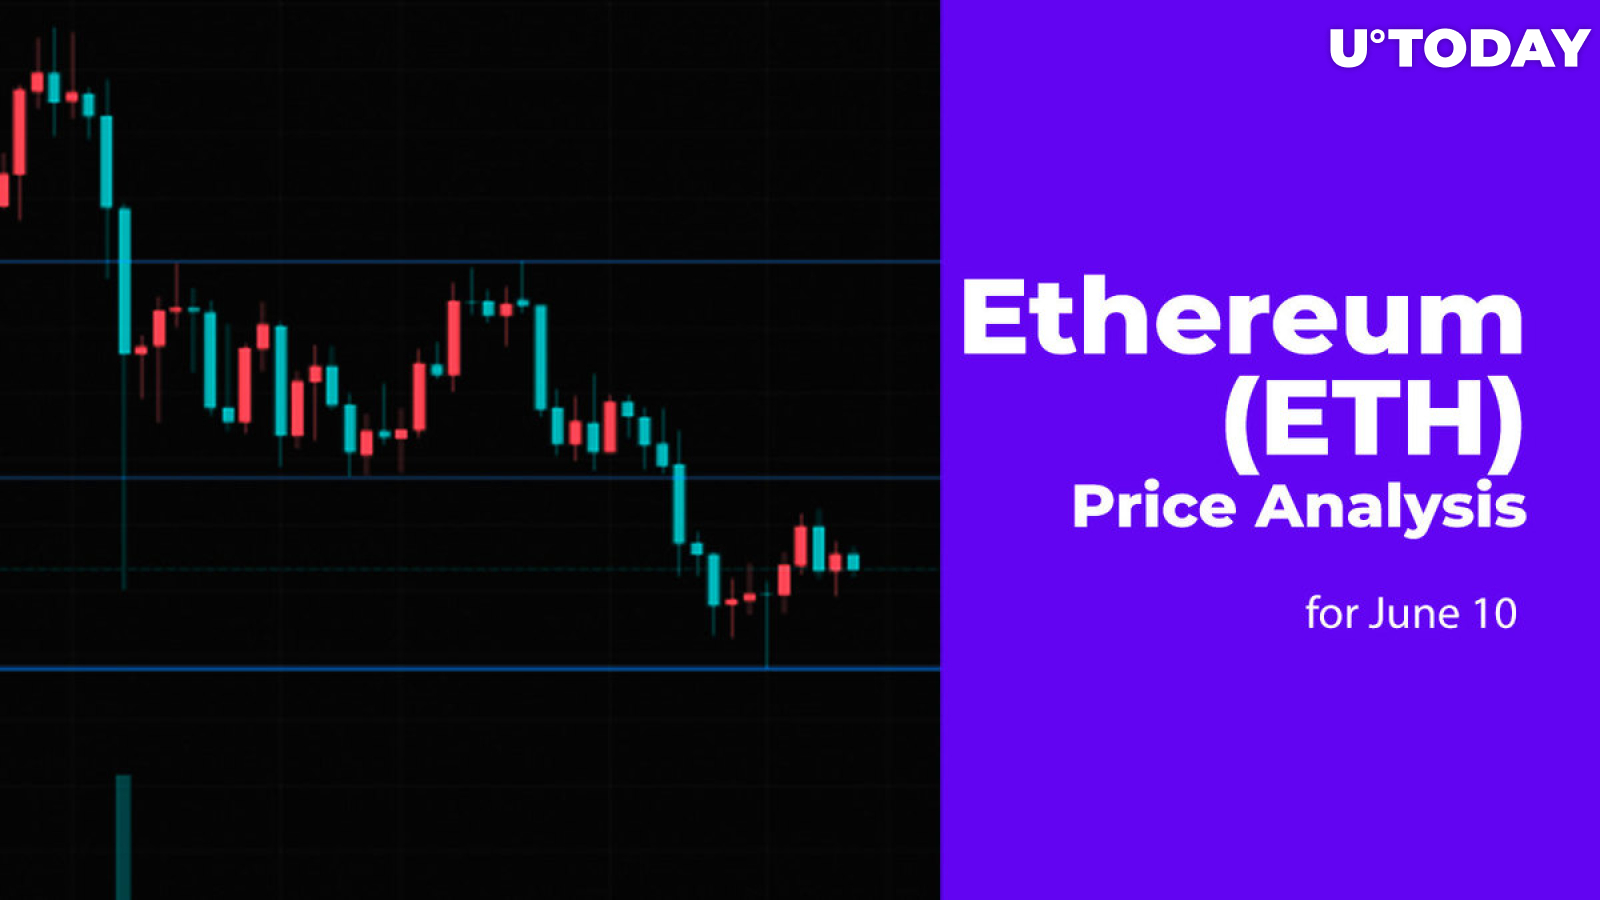 Ethereum (ETH) Price Analysis for June 10